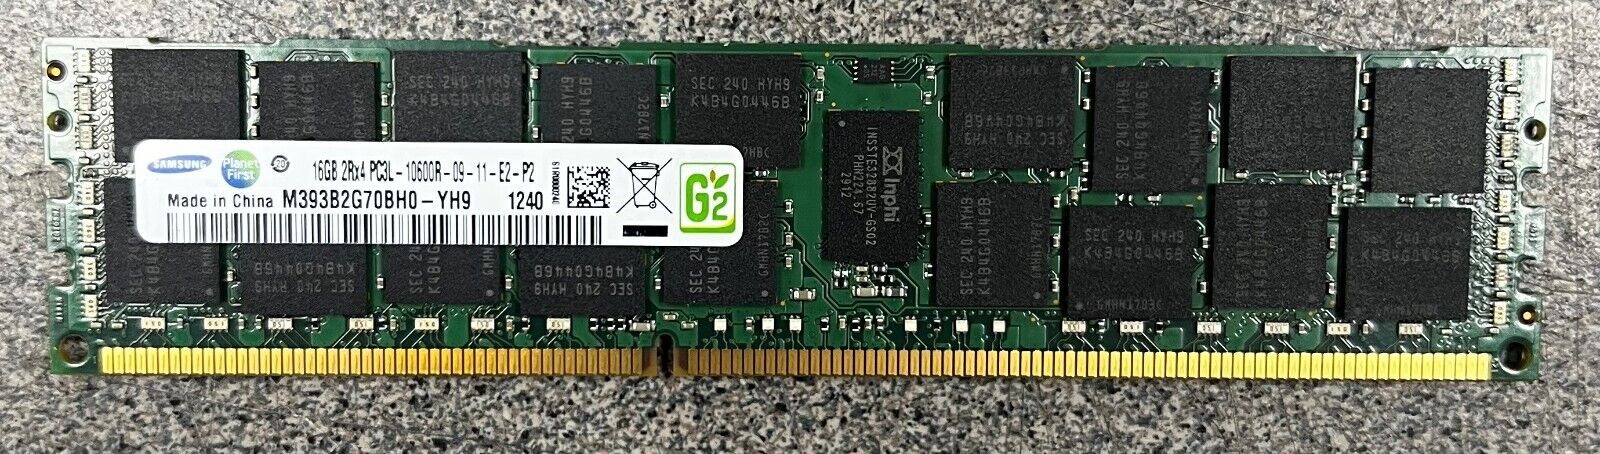 Samsung 16GB (1-stick) PC3-10600 DDR3 1333 ECC Server Memory M393B2G70BH0-YH9Q8